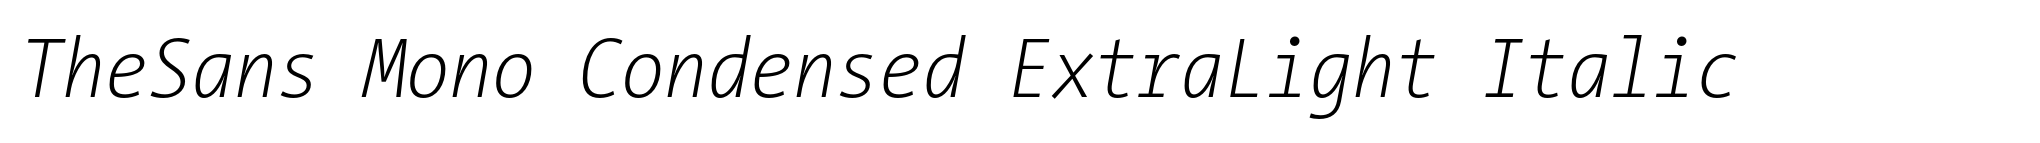 TheSans Mono Condensed ExtraLight Italic image